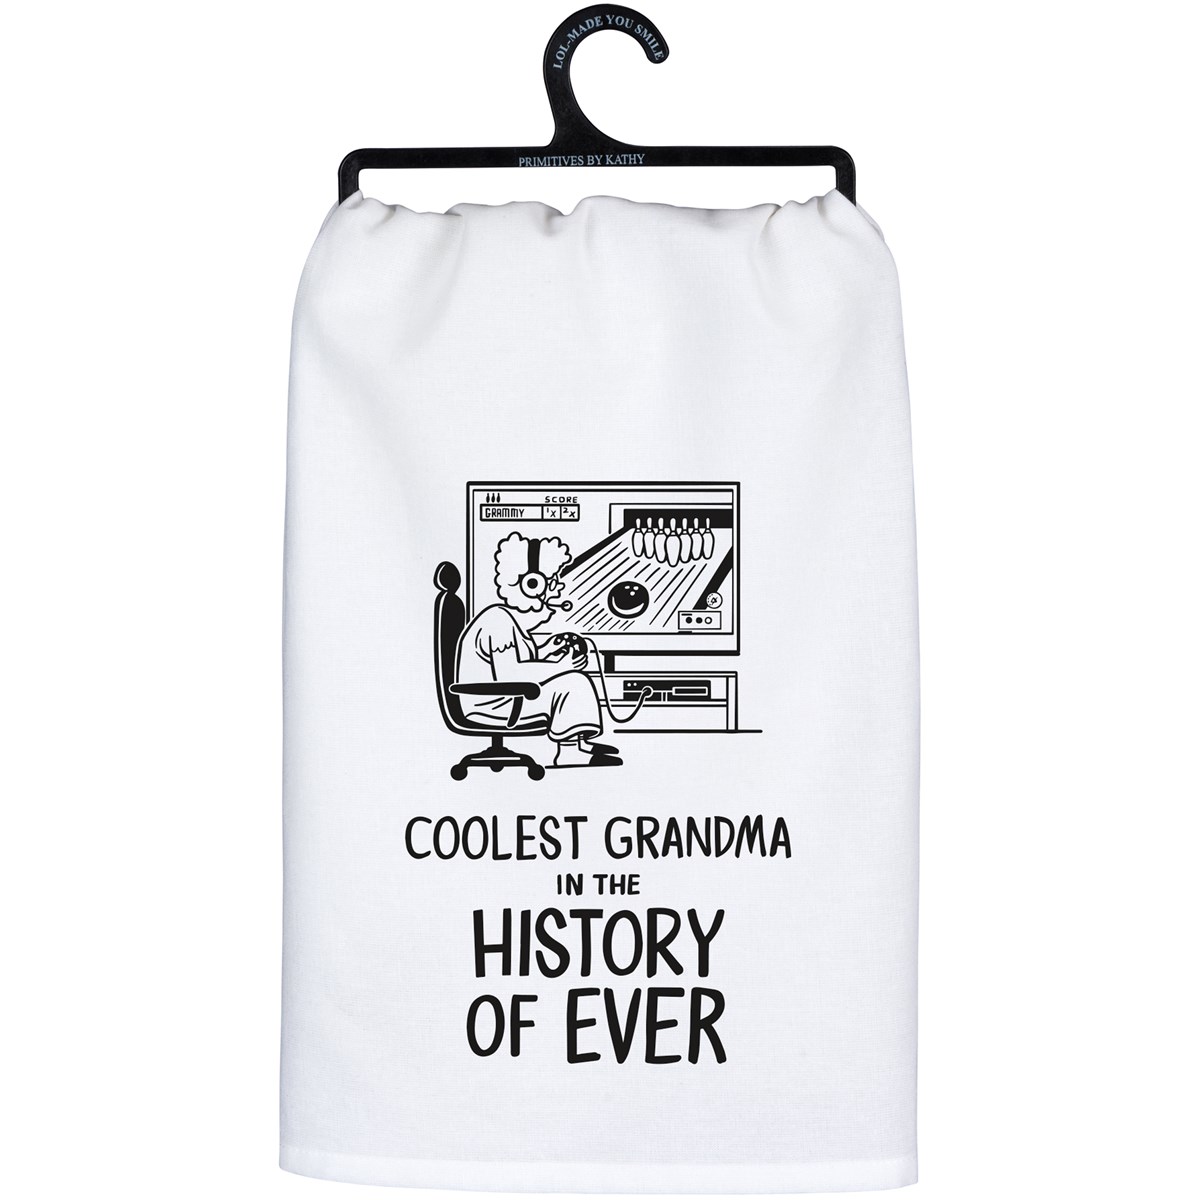 Coolest Grandma Kitchen Towel - Cotton